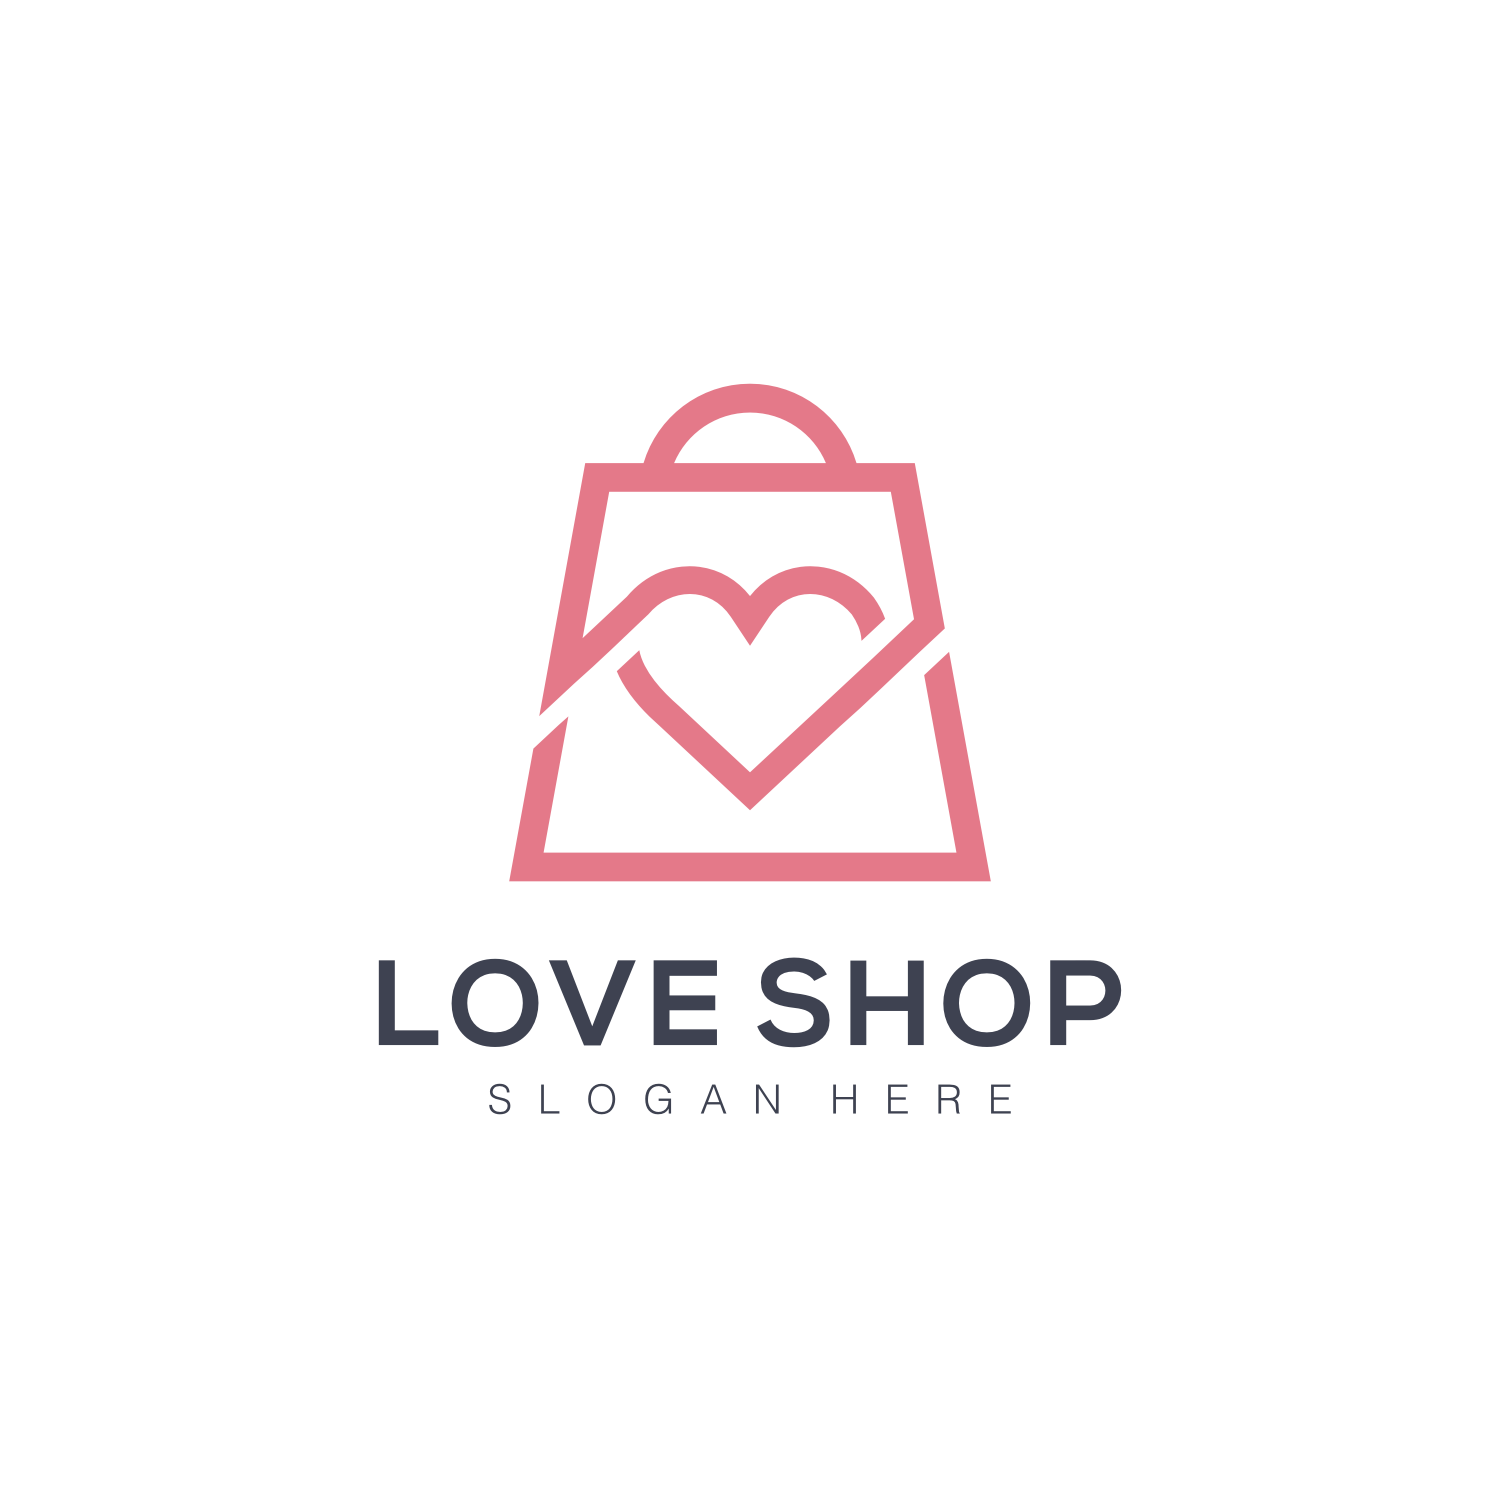 Love Shop Bag Logo Vector Design cover image.